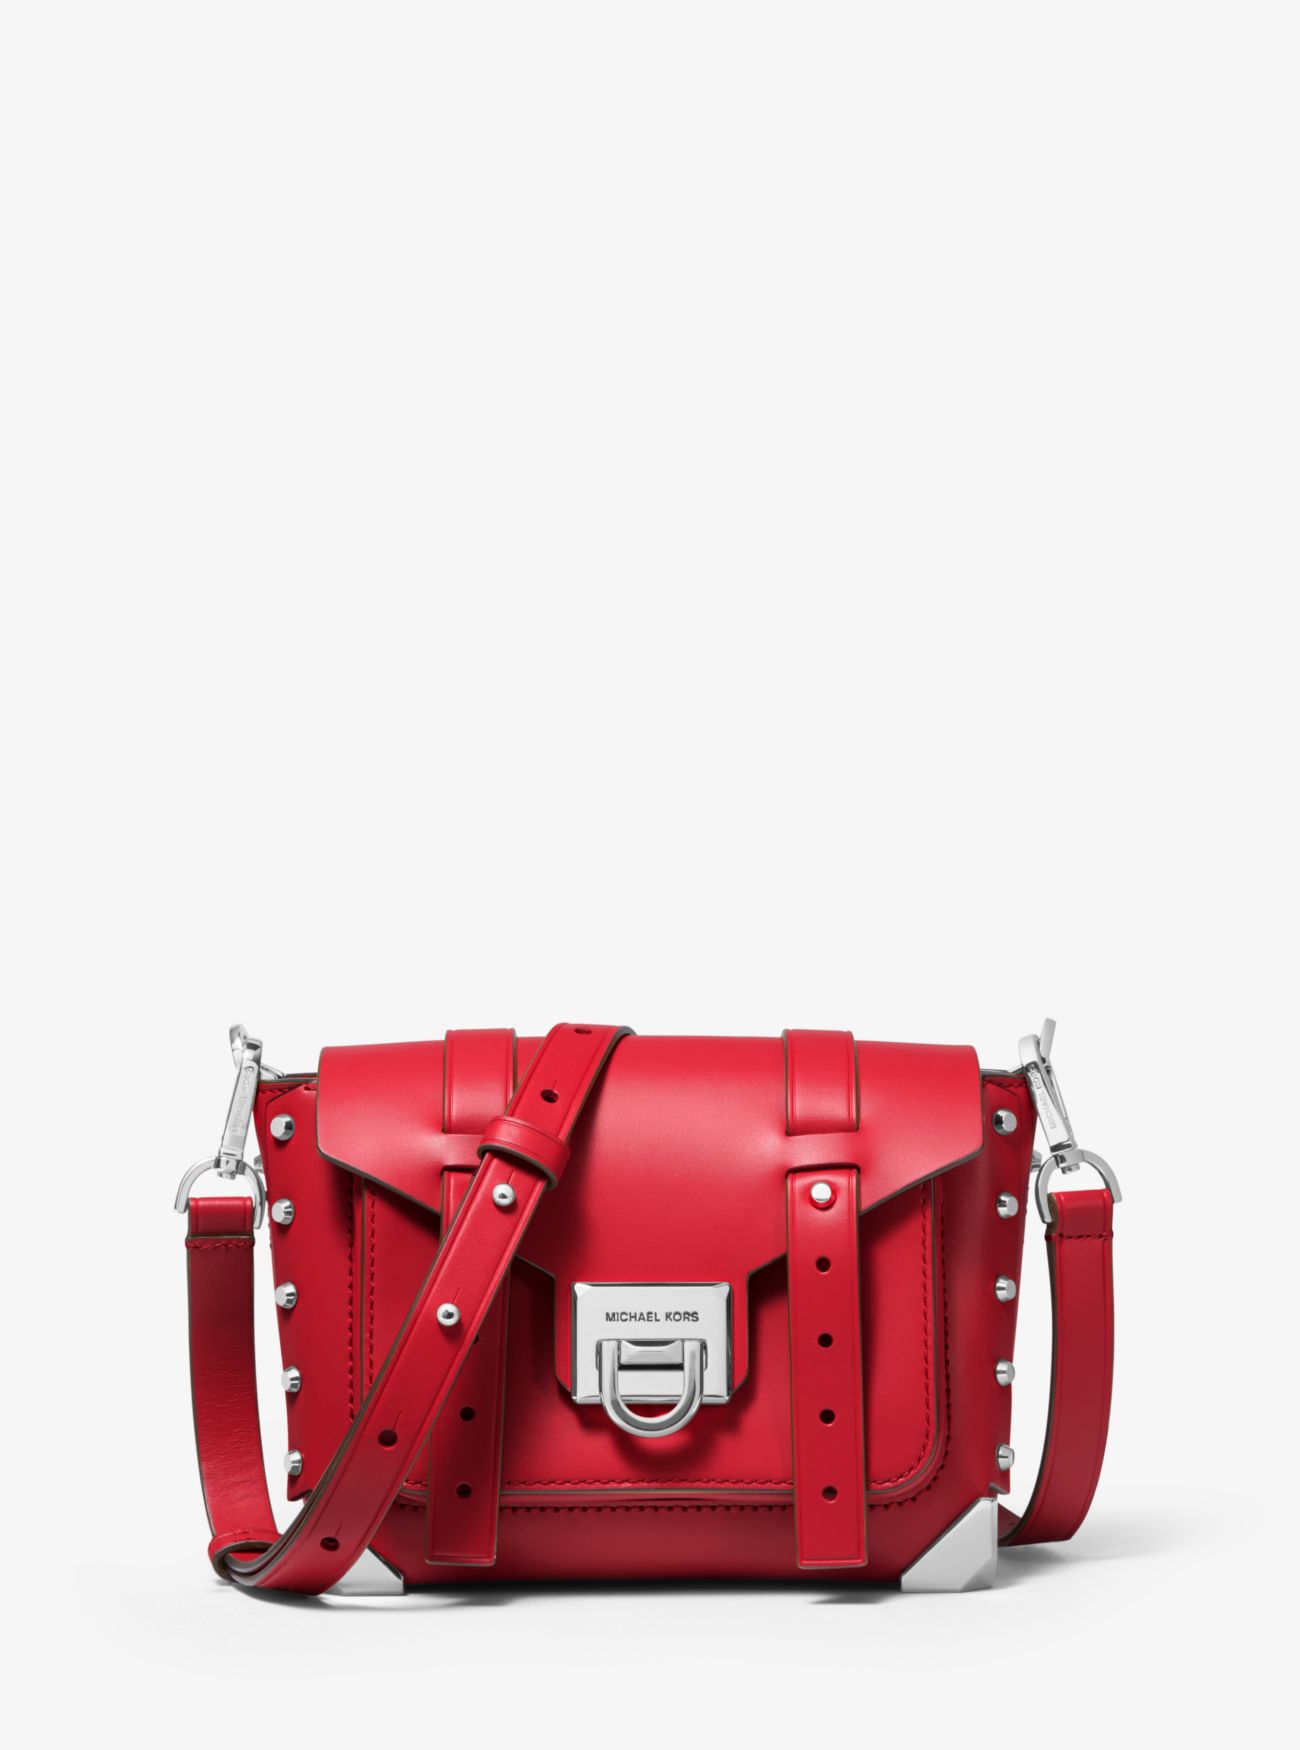 MK Manhattan Small Leather Crossbody Bag - Bright Red - Michael Kors